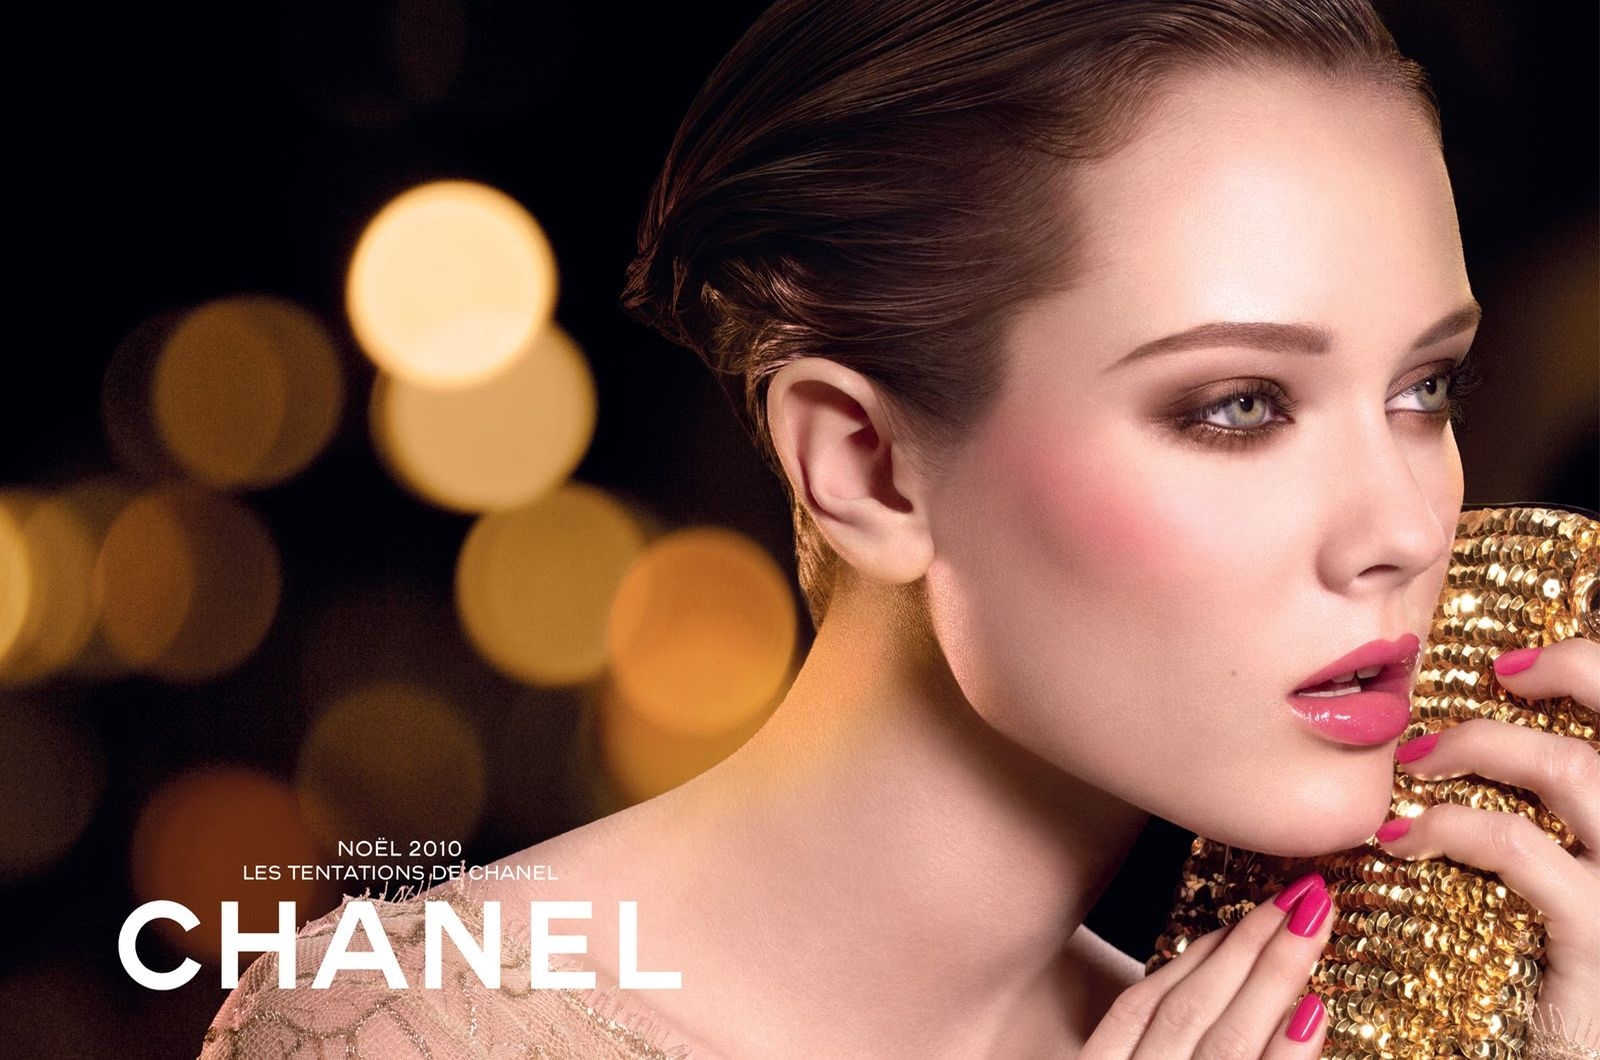 2560x1600 Chanel Girl Look 2560x1600 Resolution Wallpaper Hd Brands 4k Wallpapers Wallpapers Den